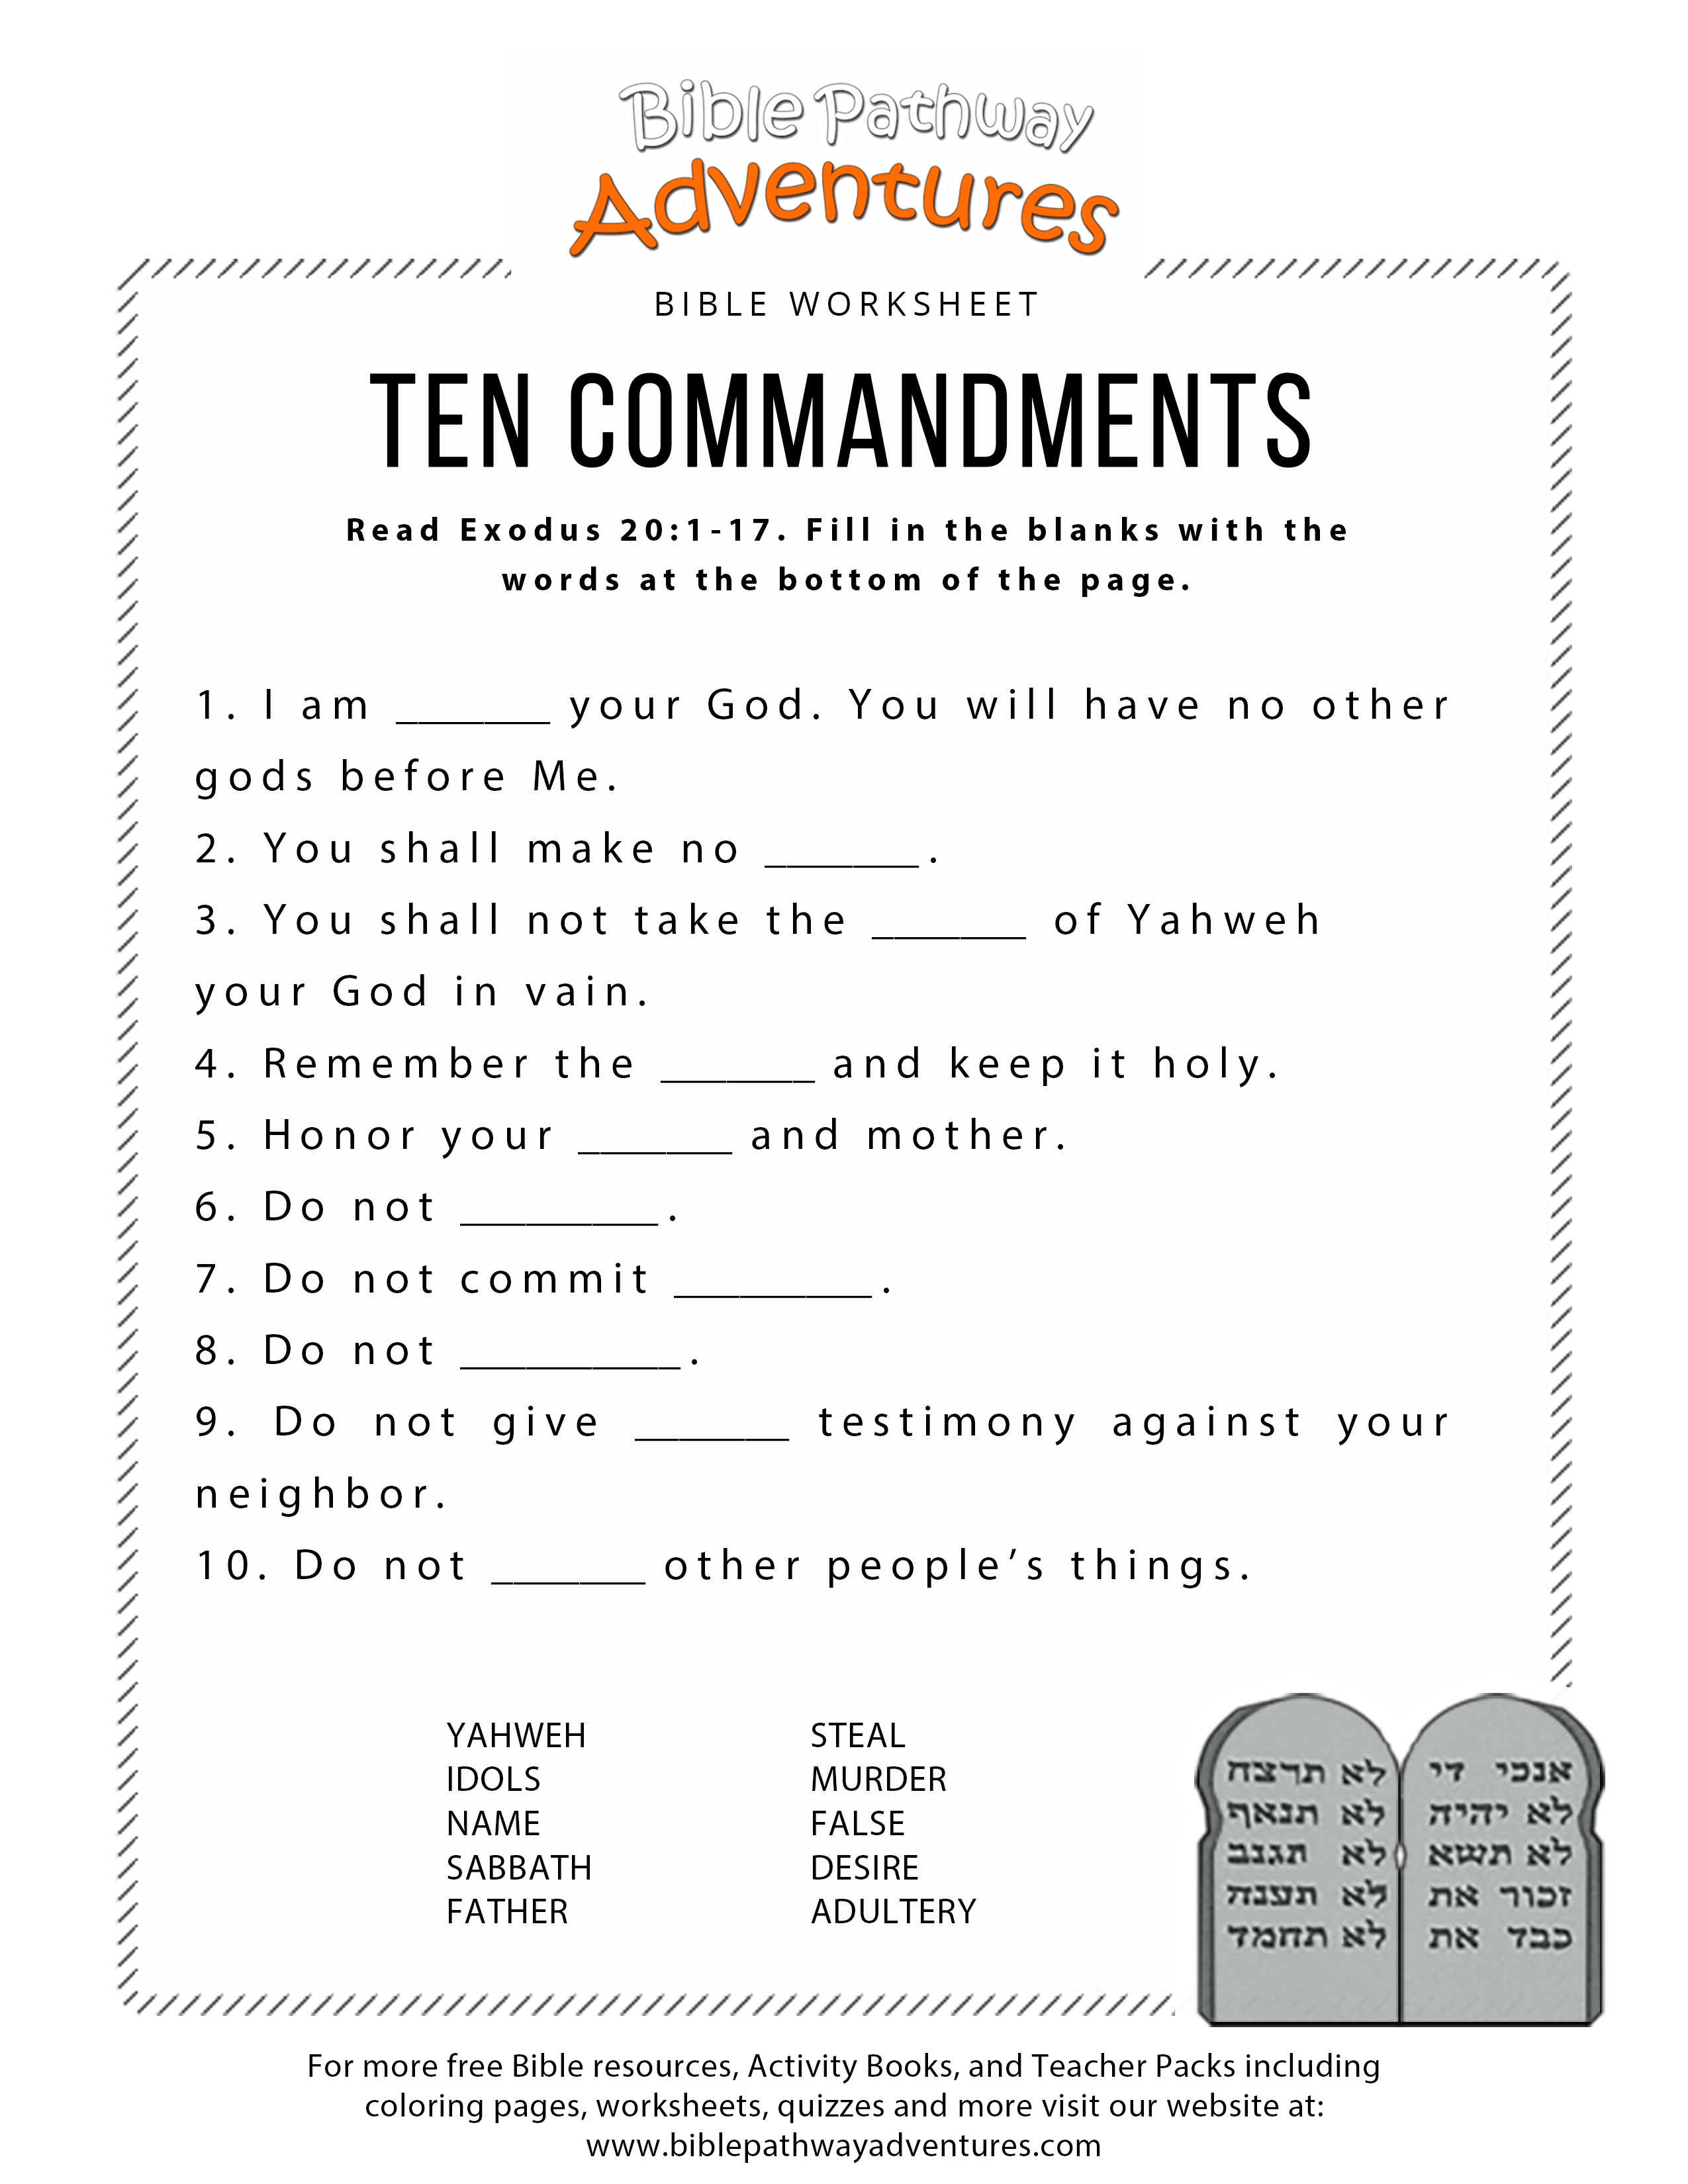 Ten Commandments Worksheet For Kids | Worksheets For Psr | Bible - Free Printable Sunday School Lessons For Kids